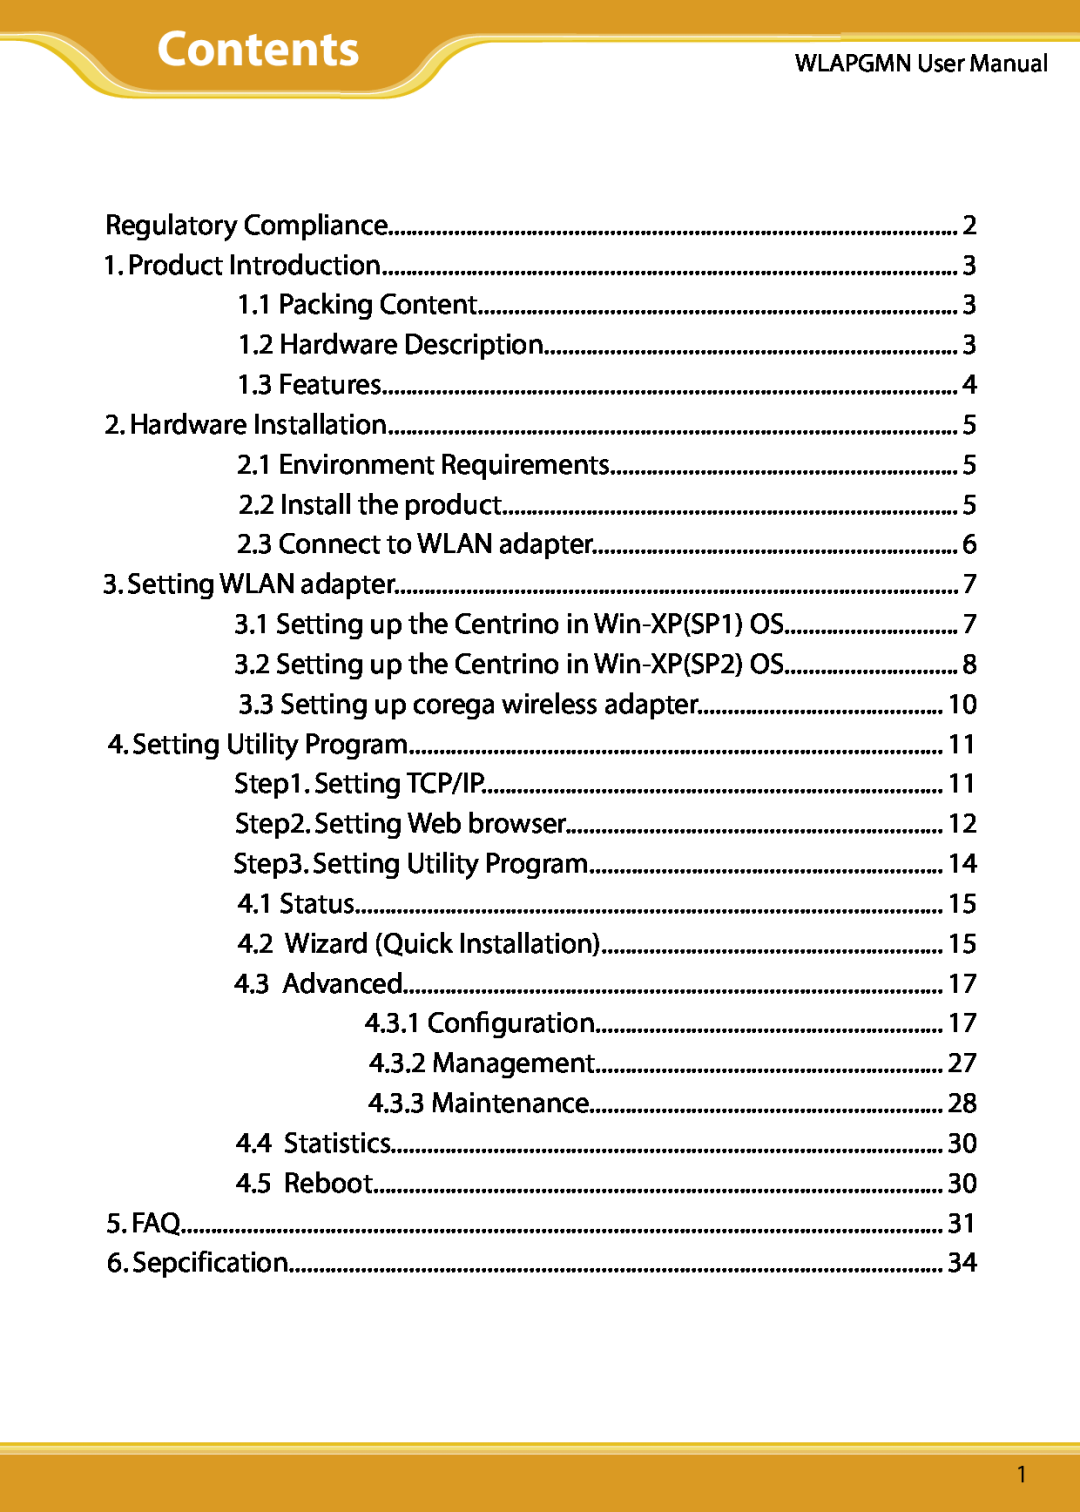 Corega CG-WLAPGMN user manual Contents, 4.3.1 Conﬁguration, Management, Maintenance 